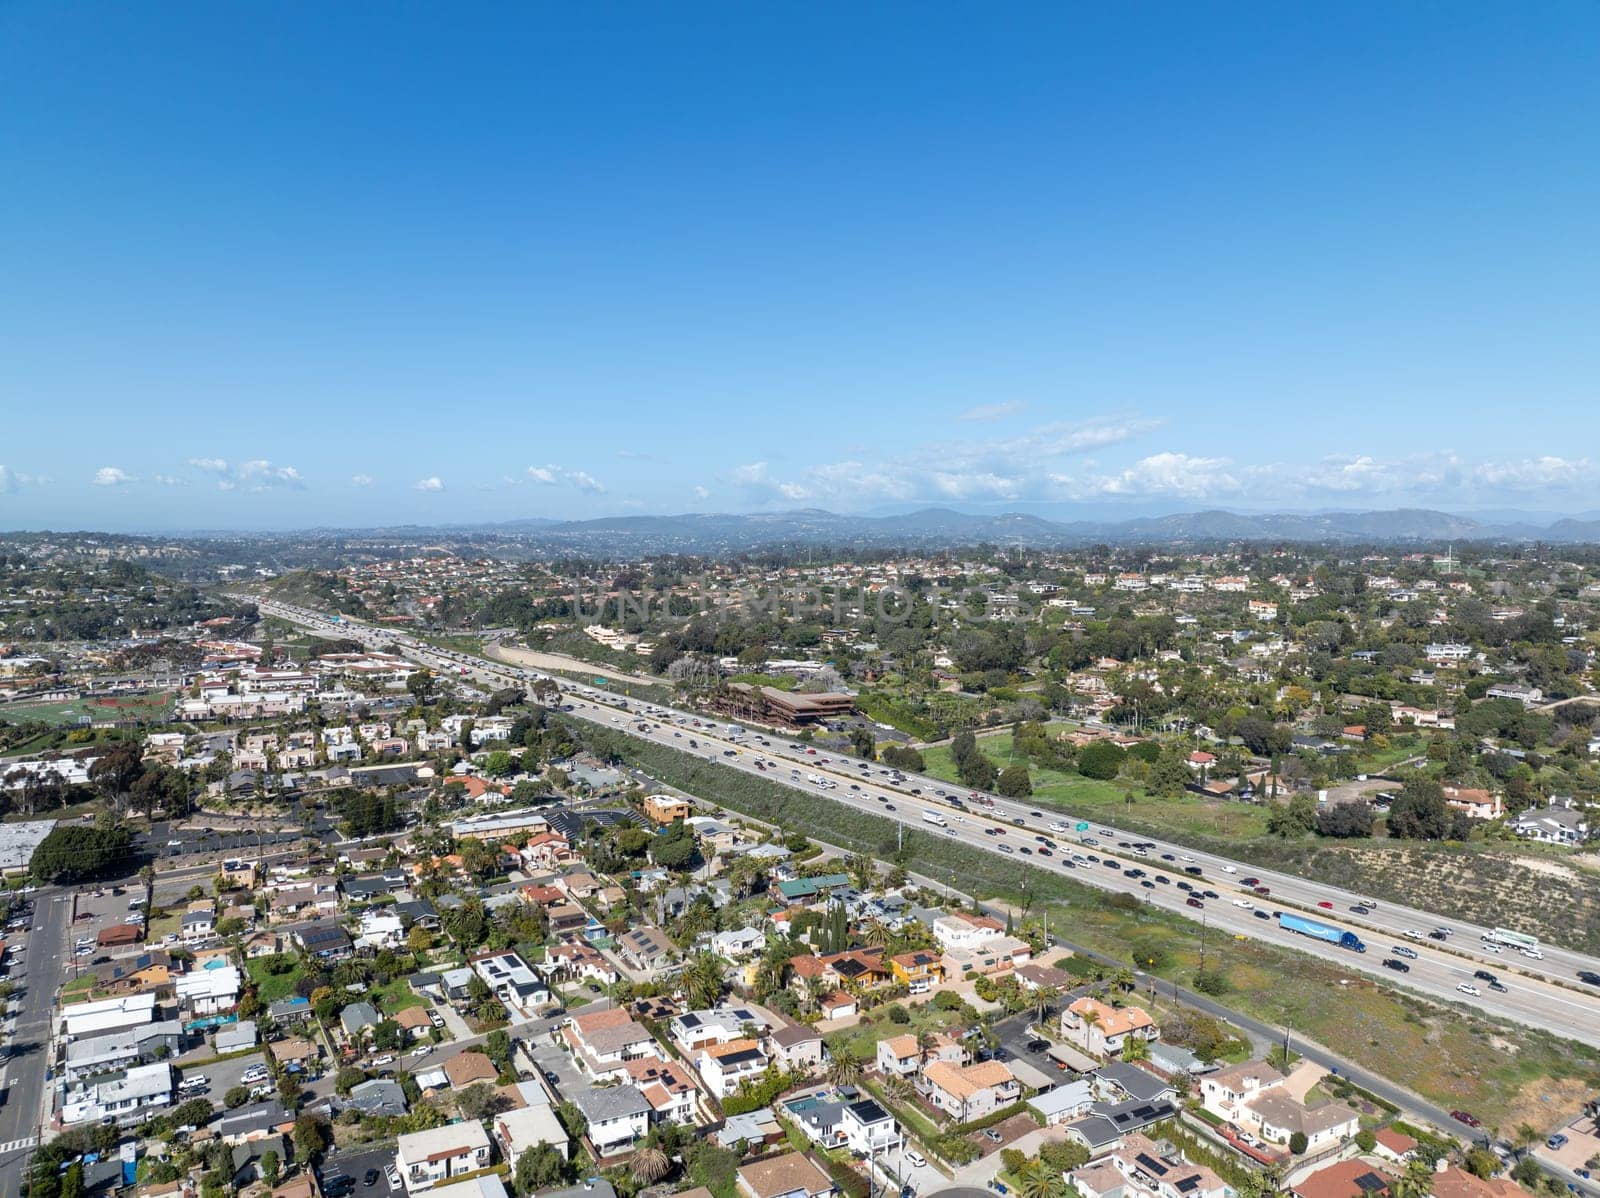 Aerial view of highway interchange and junction, San Diego Freeway interstate 5, California by Bonandbon